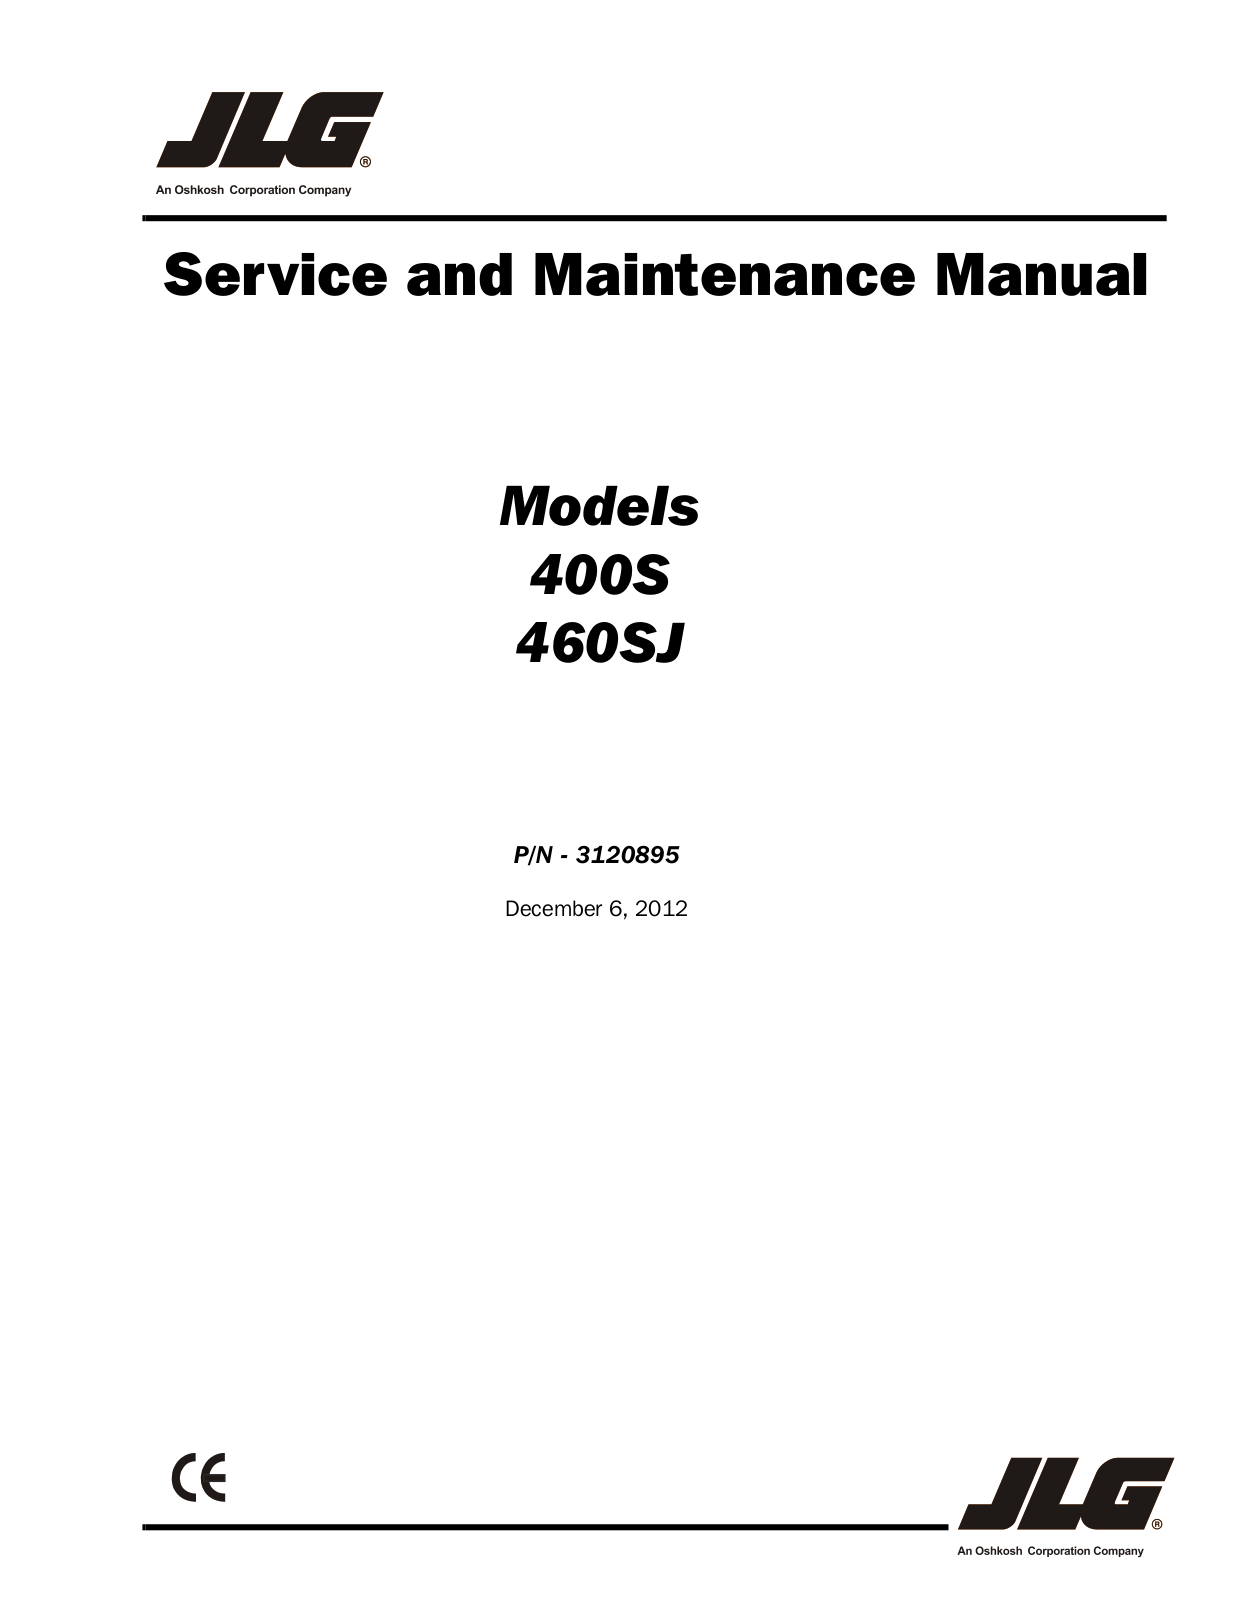 JLG 460SJ Service Manual